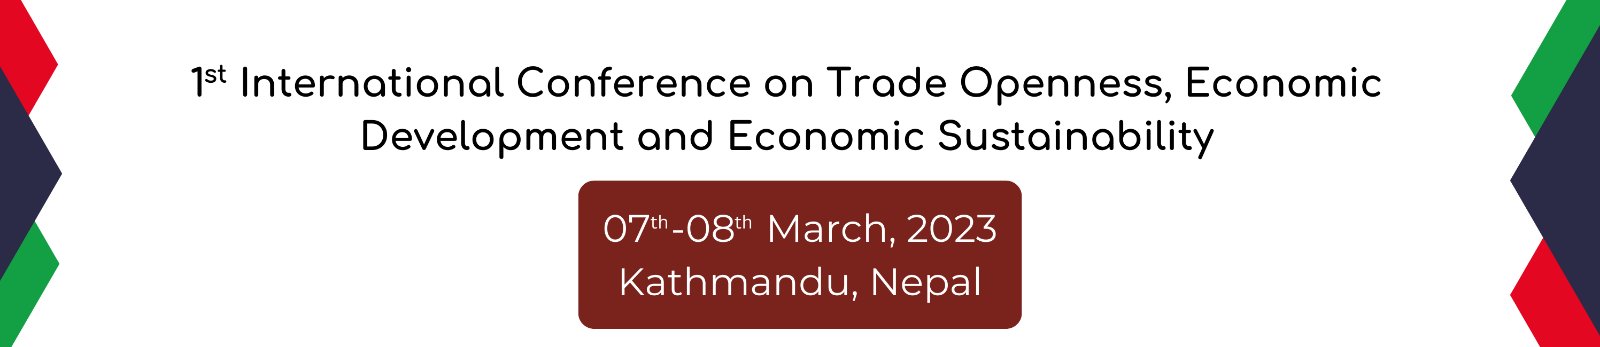 WCP Nepal 1st International Conference